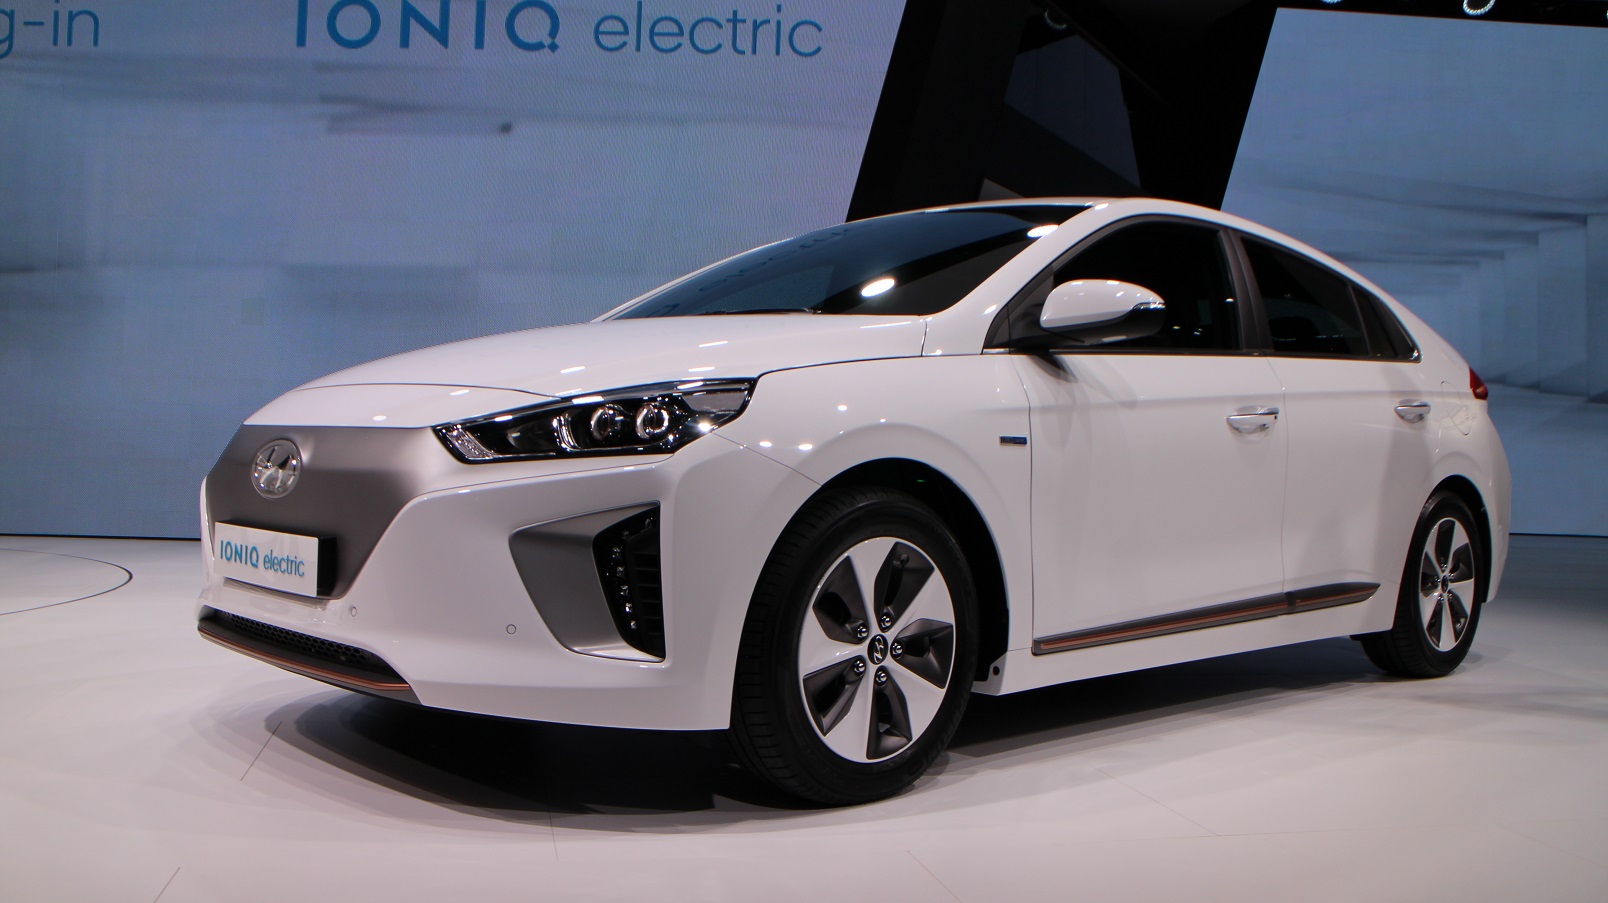 19 ioniq plug in hybrid electric vehicle